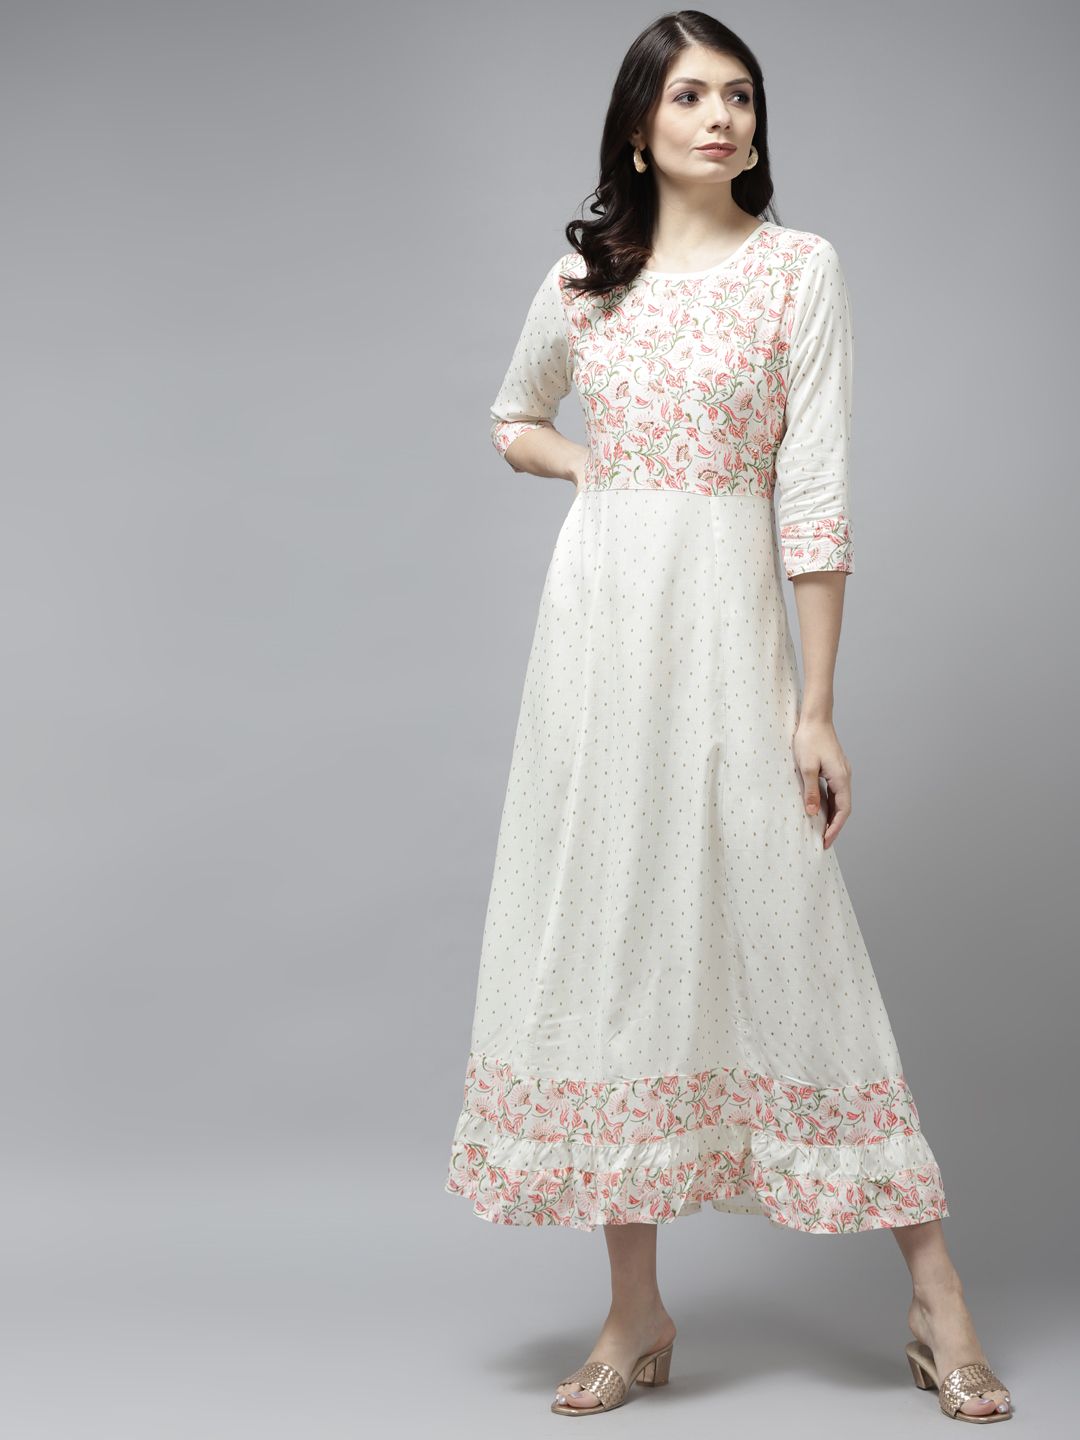 Yufta White & Pink Ethnic Motifs Printed A-Line Midi Dress Price in India